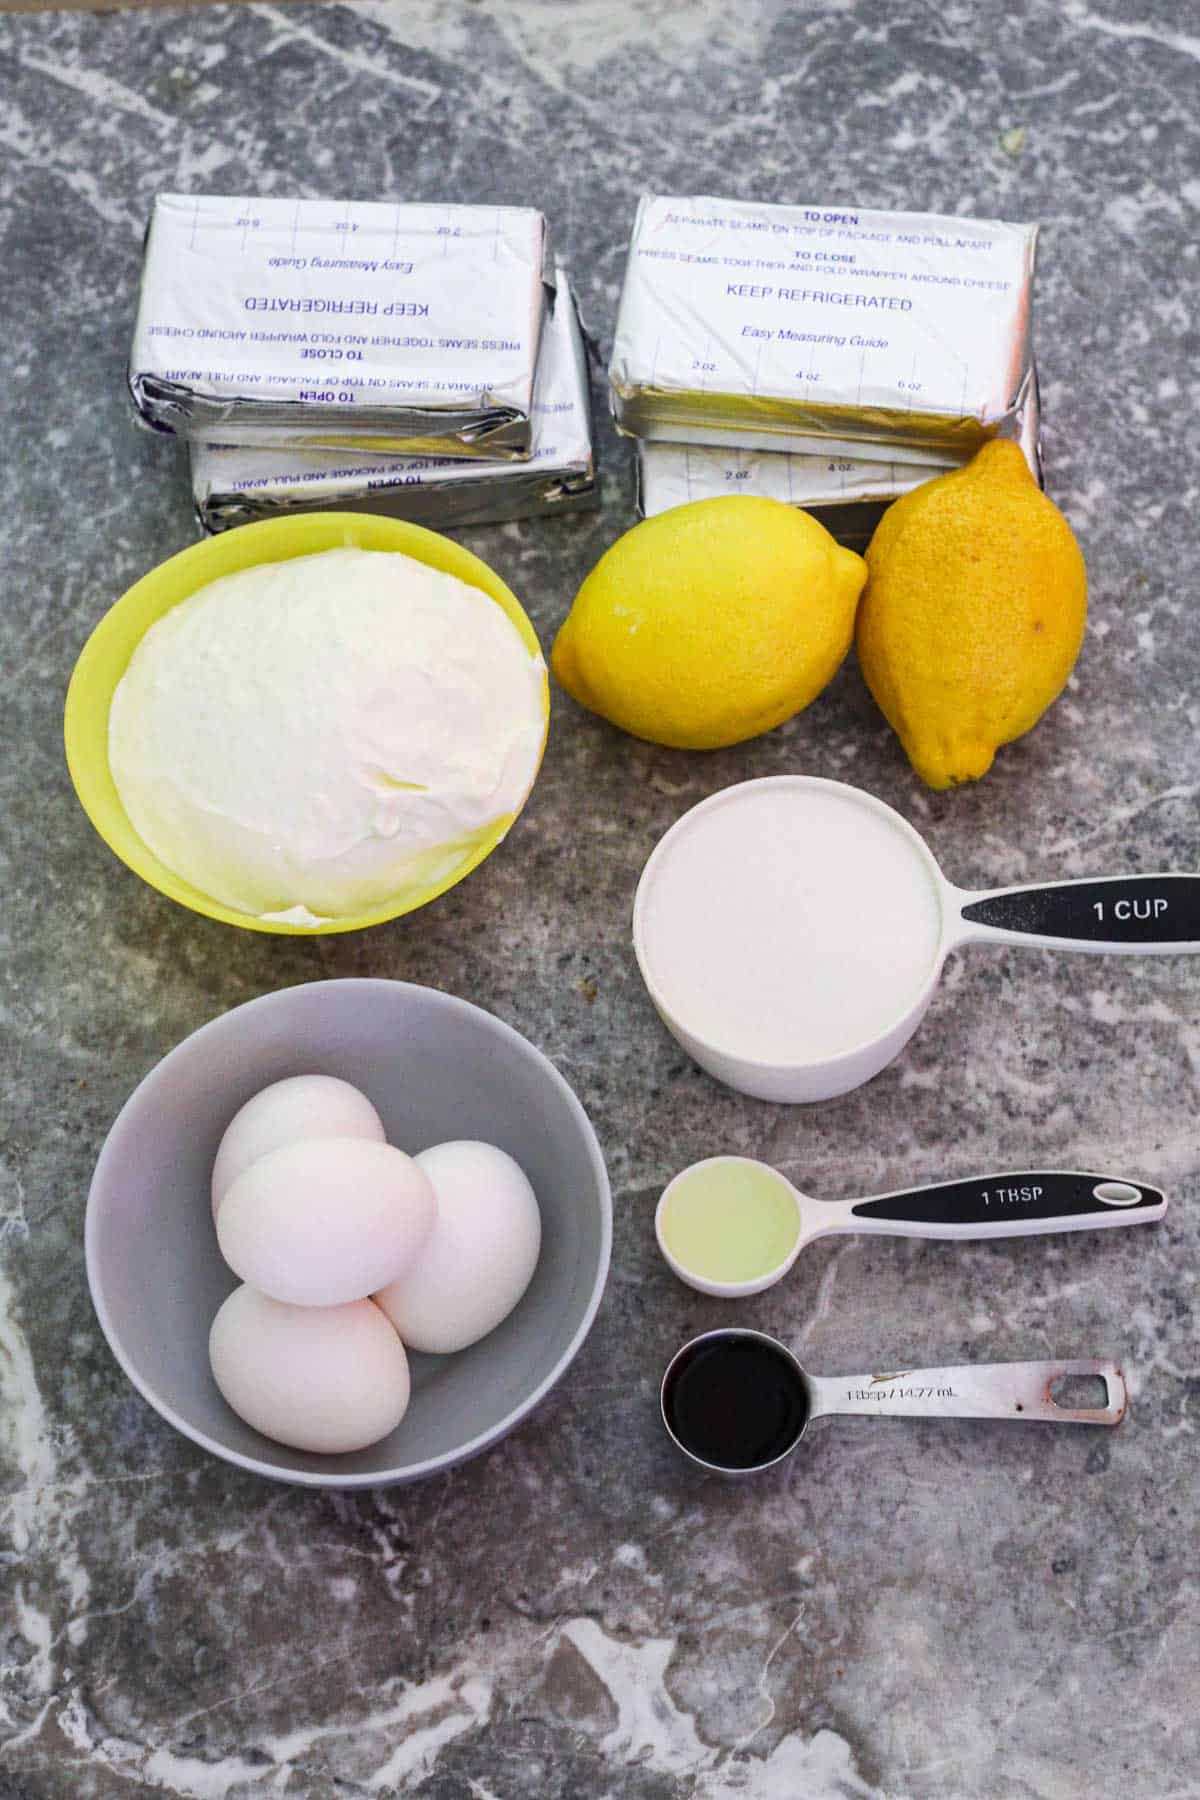 Ingredients for lemon cheesecake filling: cream cheese, lemons, sour cream, eggs, vanilla extract, lemon extract, sugar.